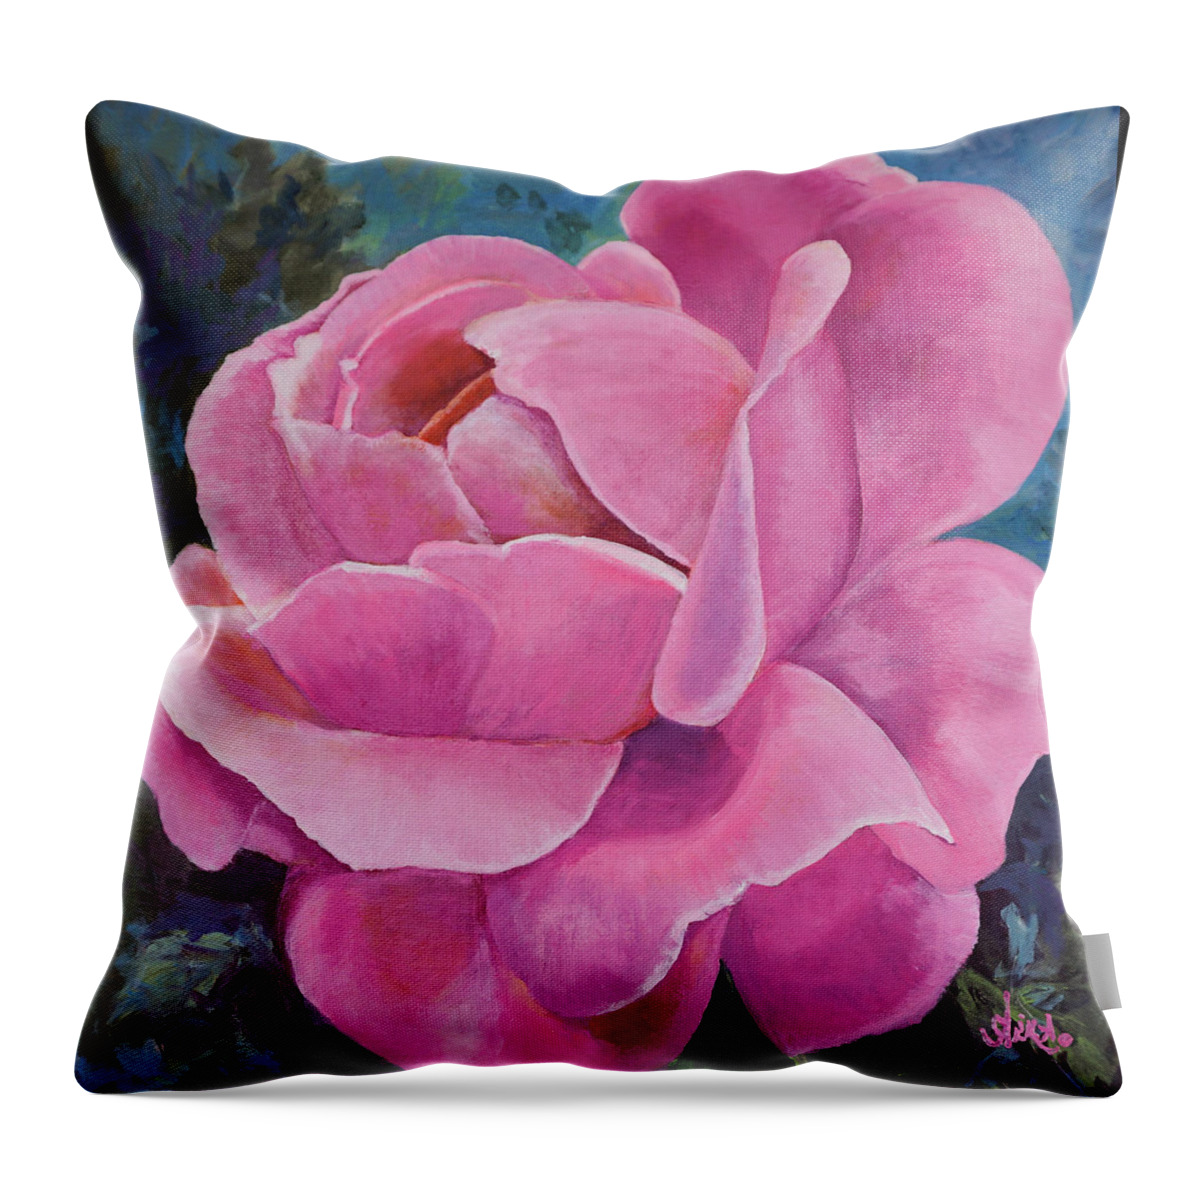 Rose Throw Pillow featuring the painting Pink Rose by Alika Kumar